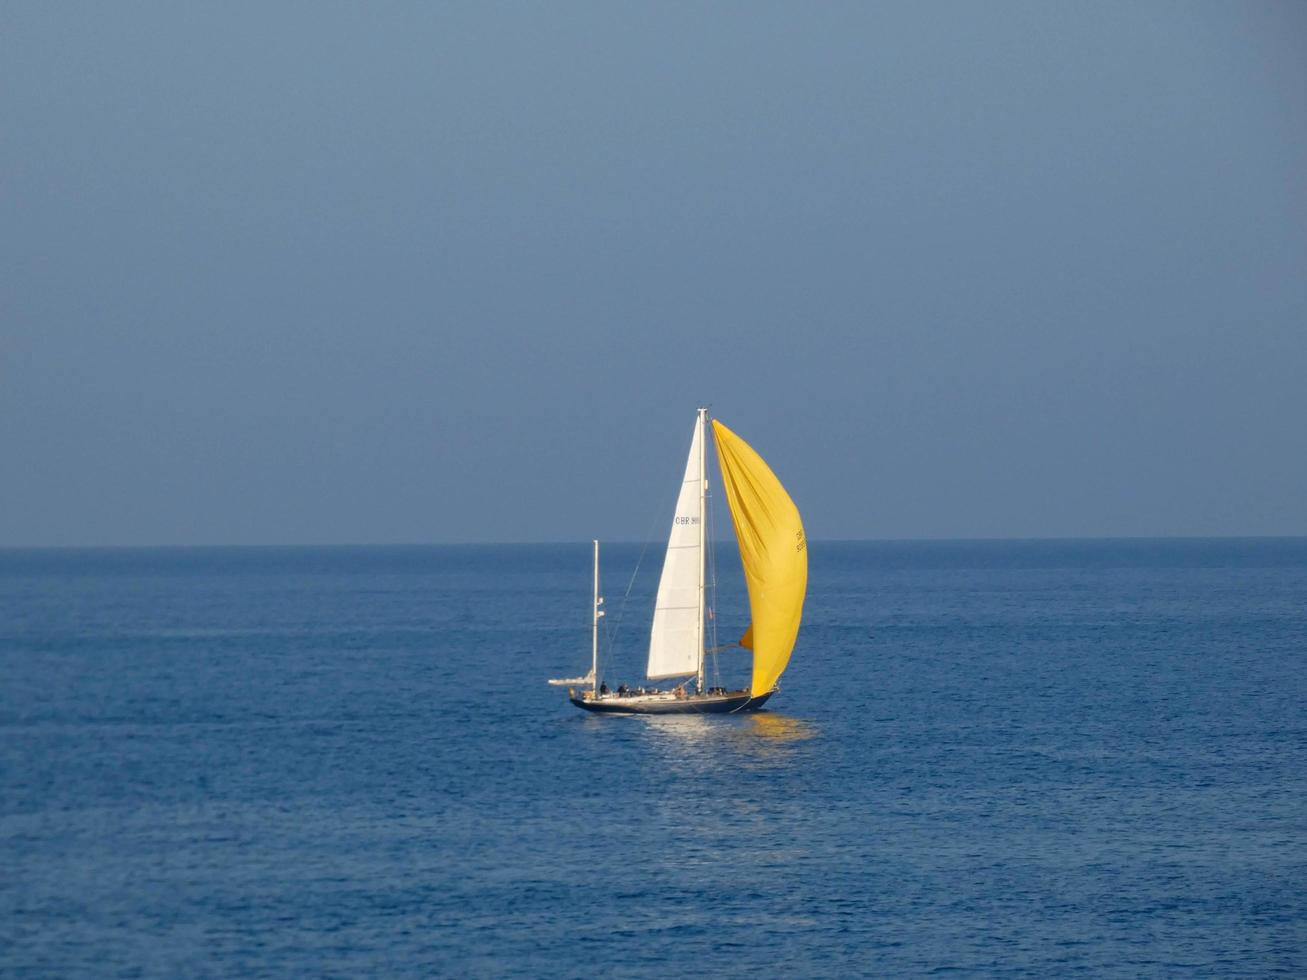 velero deportivo navegando con velas desplegadas en un mar azul foto